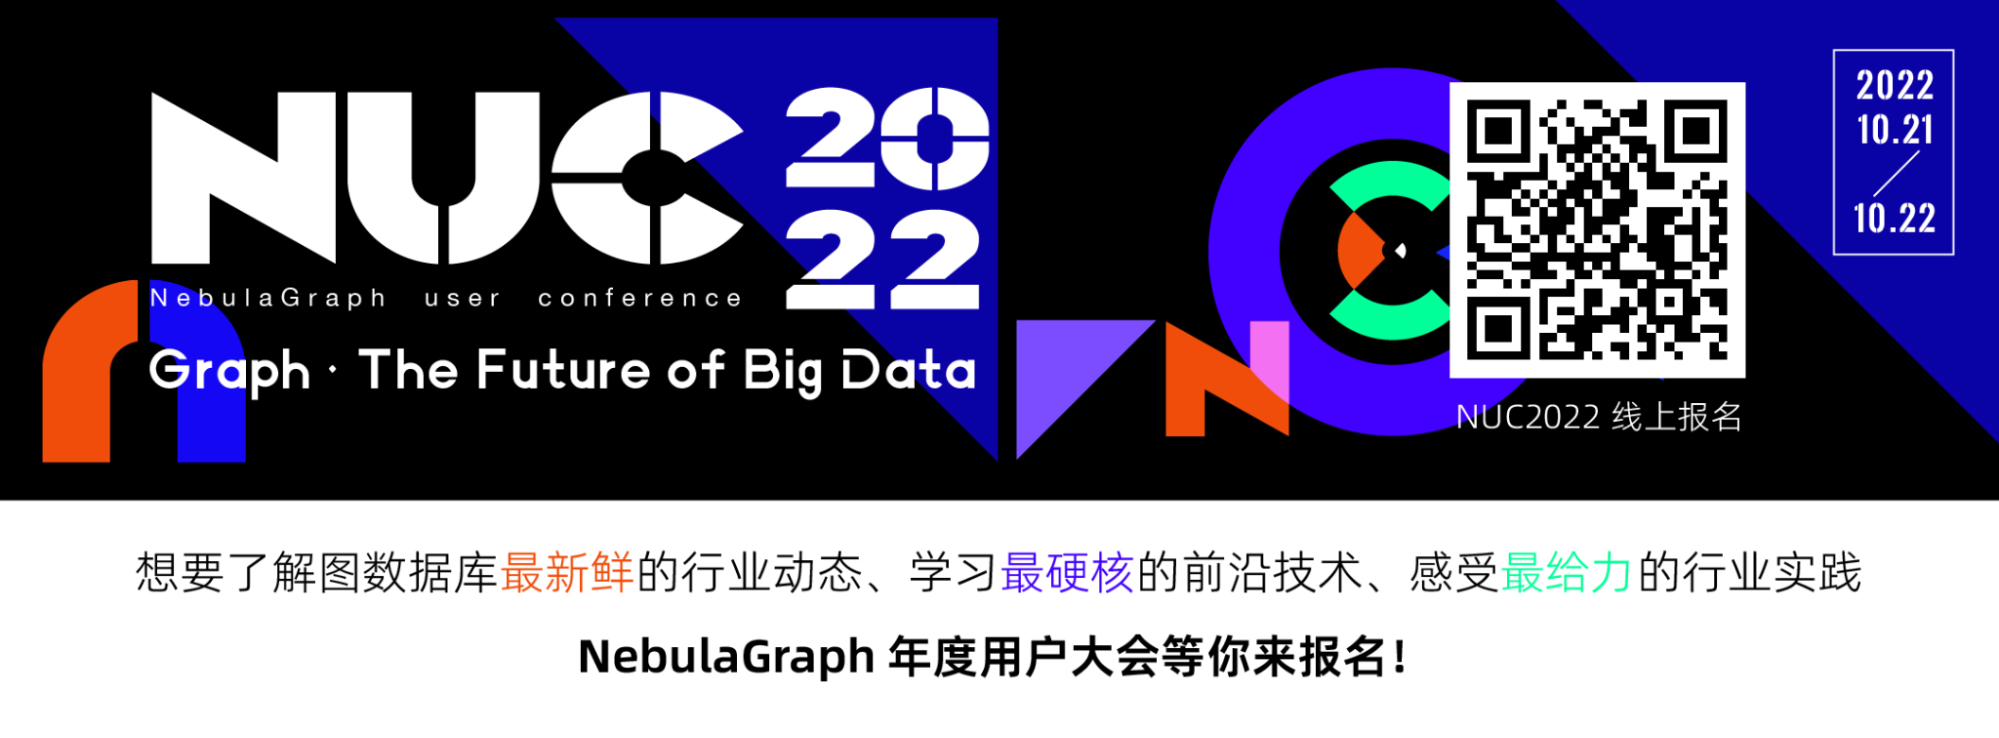 NebulaGraph 图数据库 图数据分析 用户大会